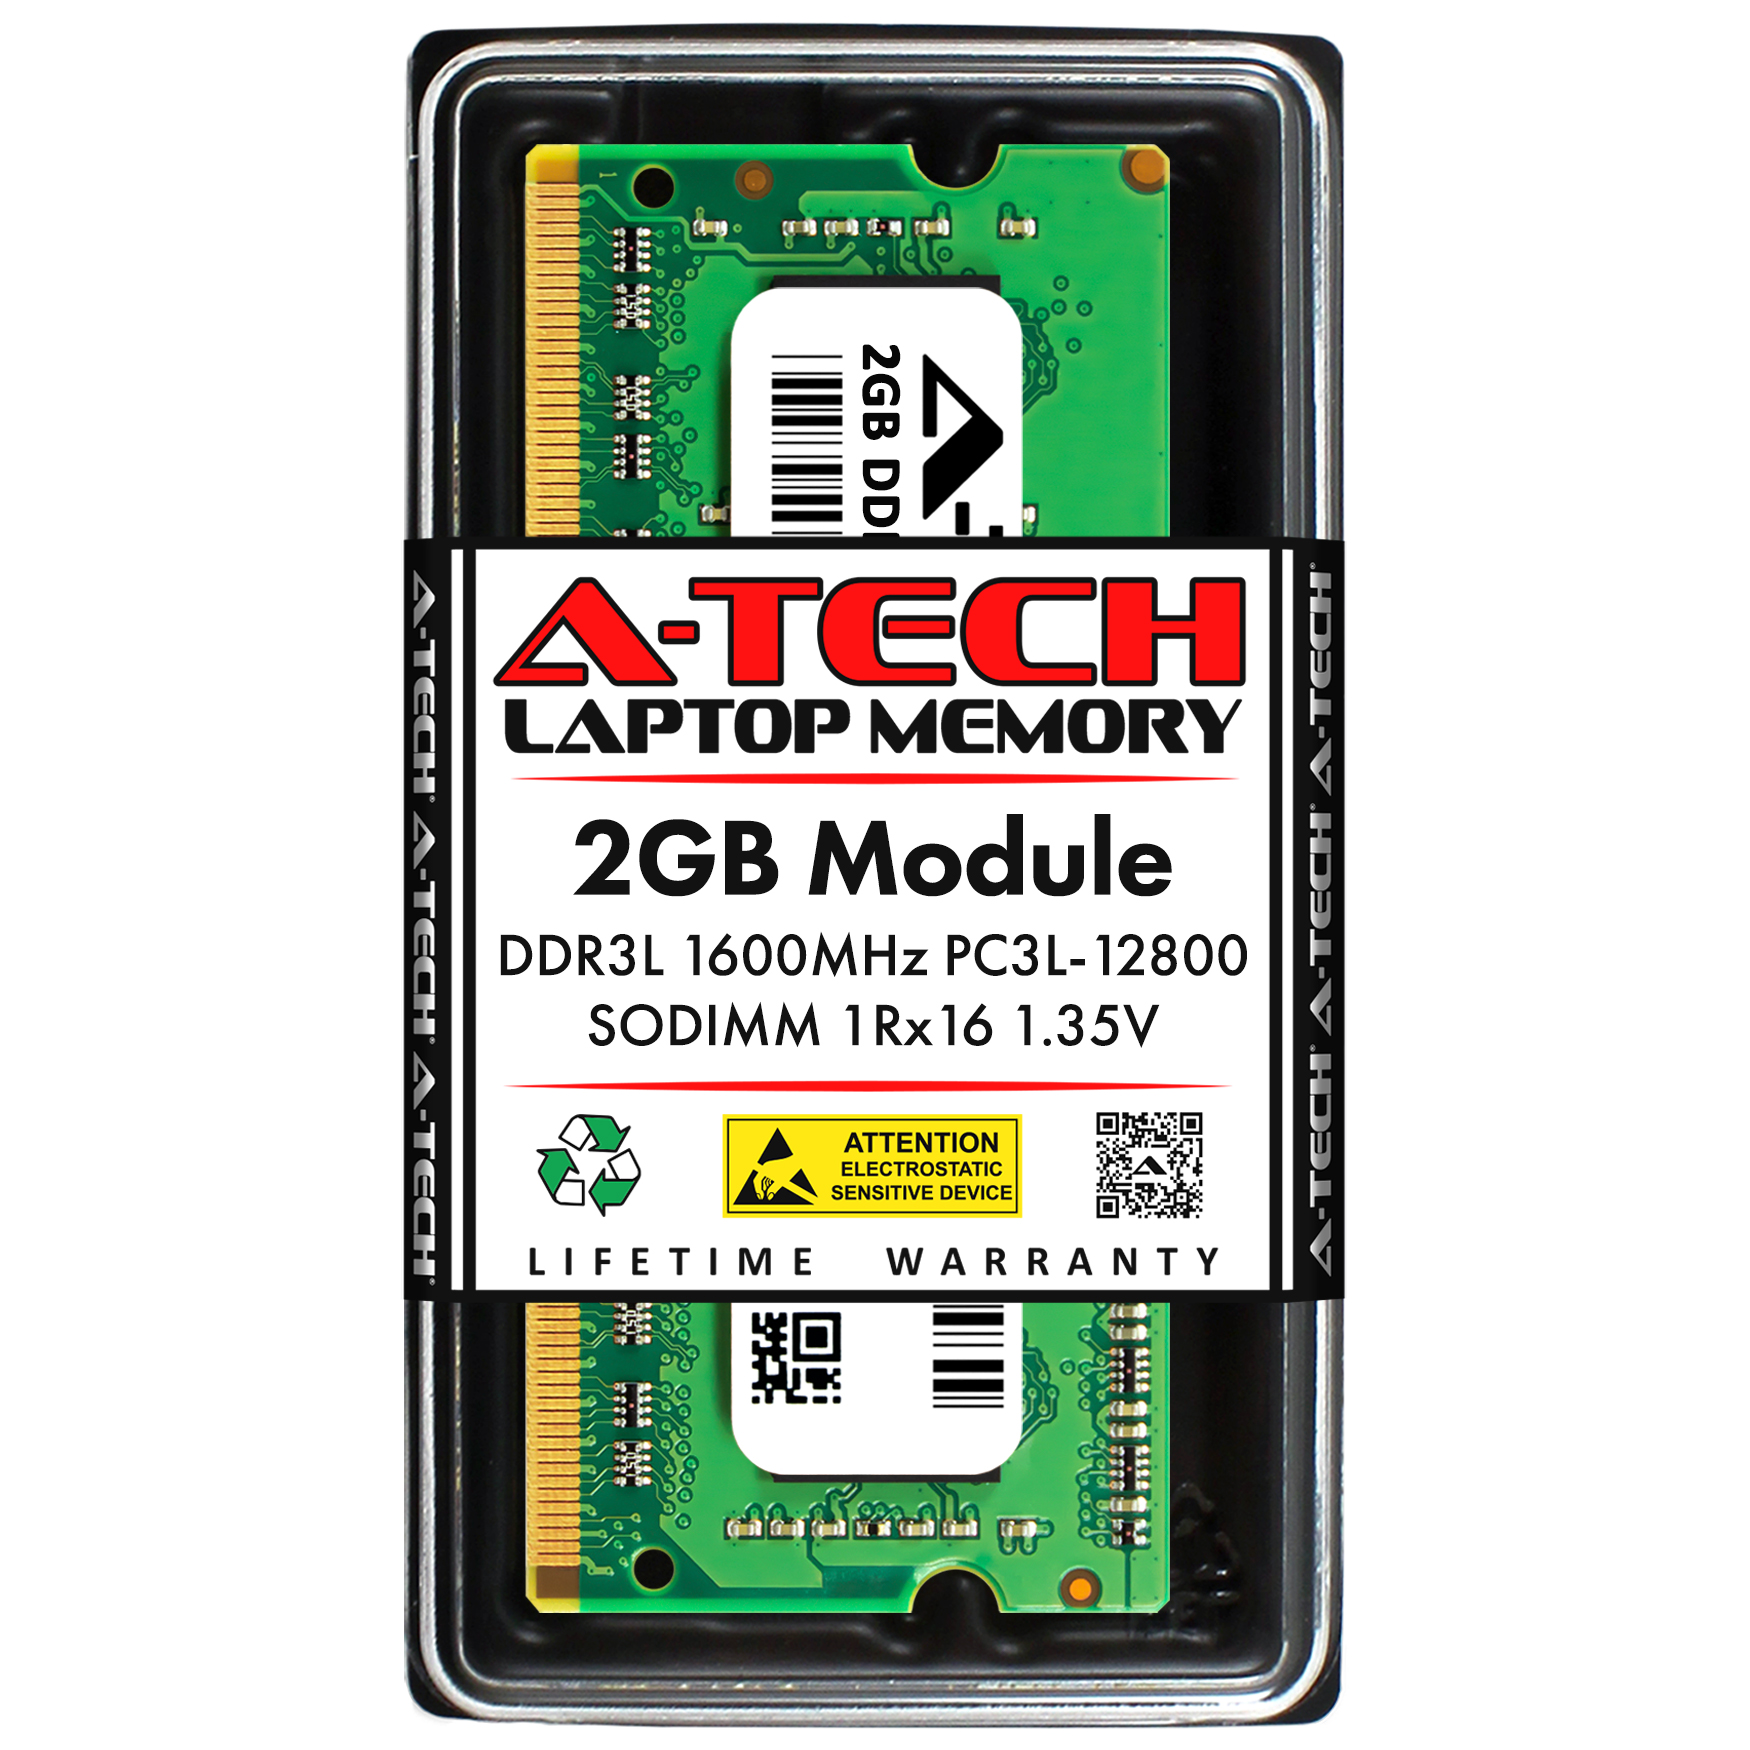 DDR3L 1600MHz PC3-12800 Non ECC SO-DIMM 1Rx16 1.35V Single Laptop & Notebook Upgrade Module Replacement for A7568815 A-Tech 2GB Memory RAM for Dell Precision M4600 